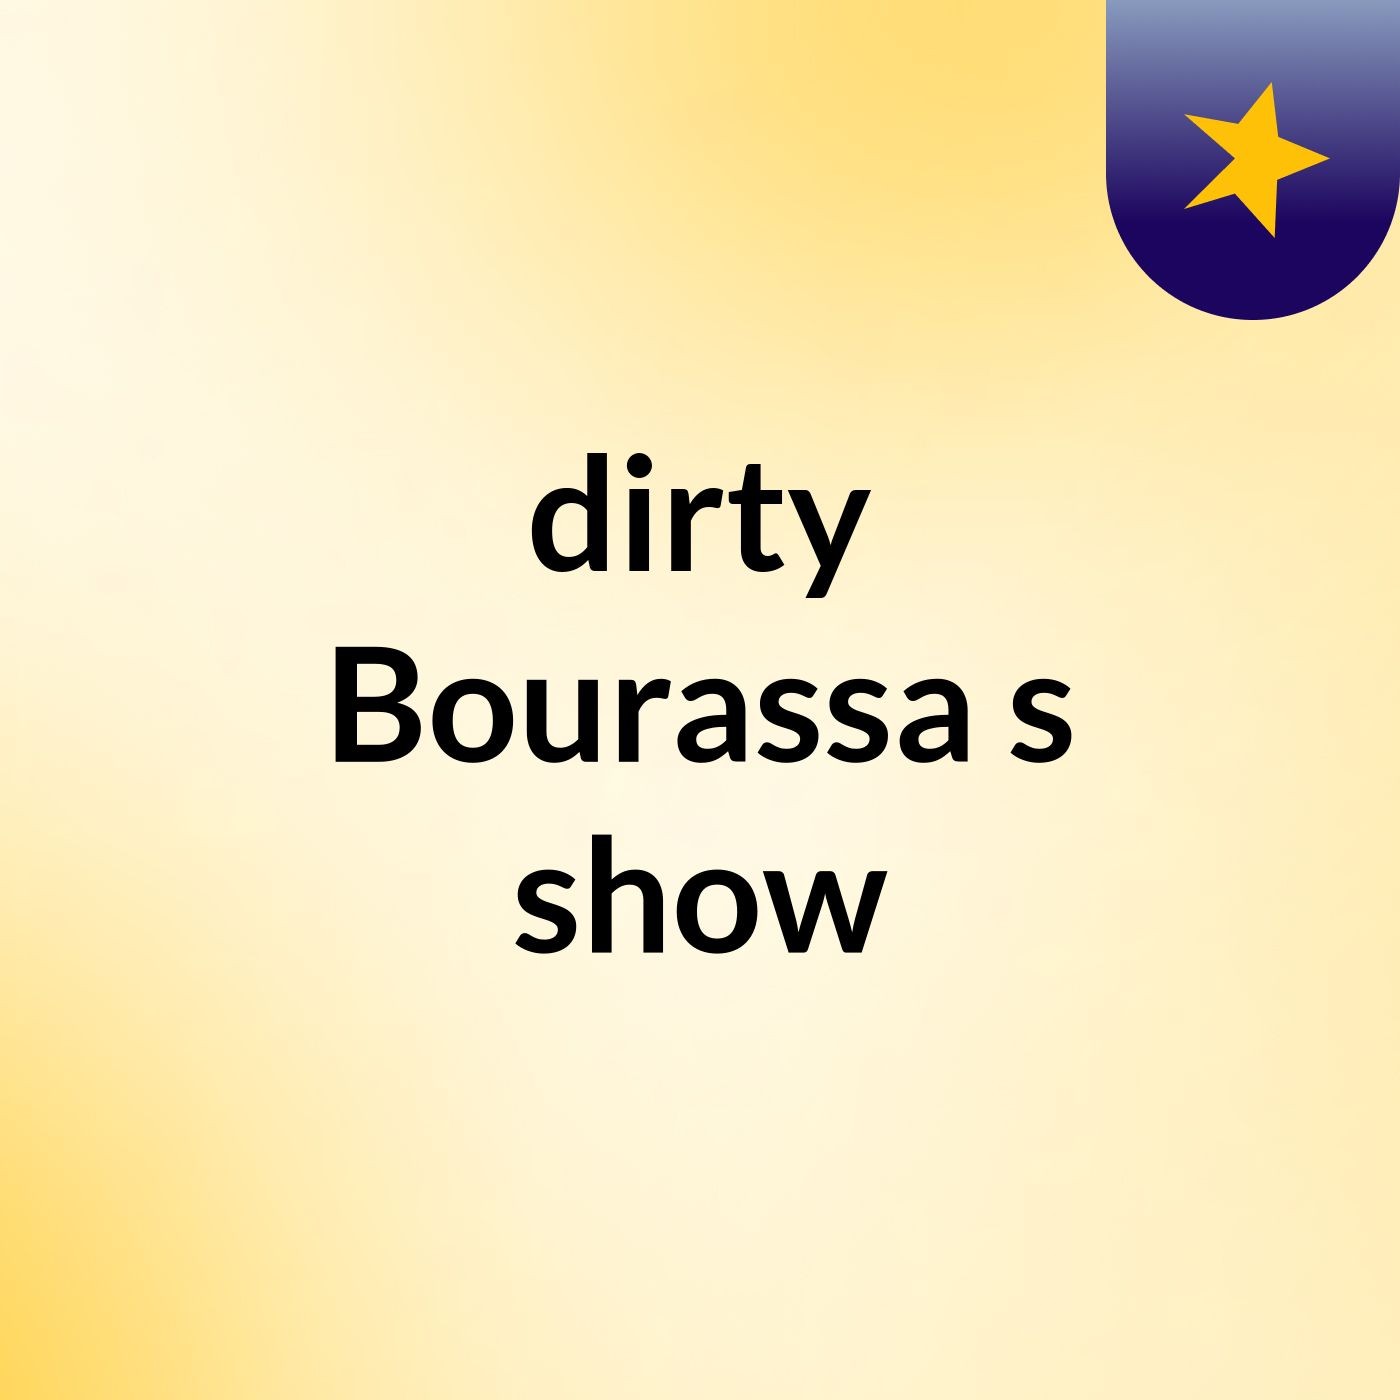 dirty Bourassa's show